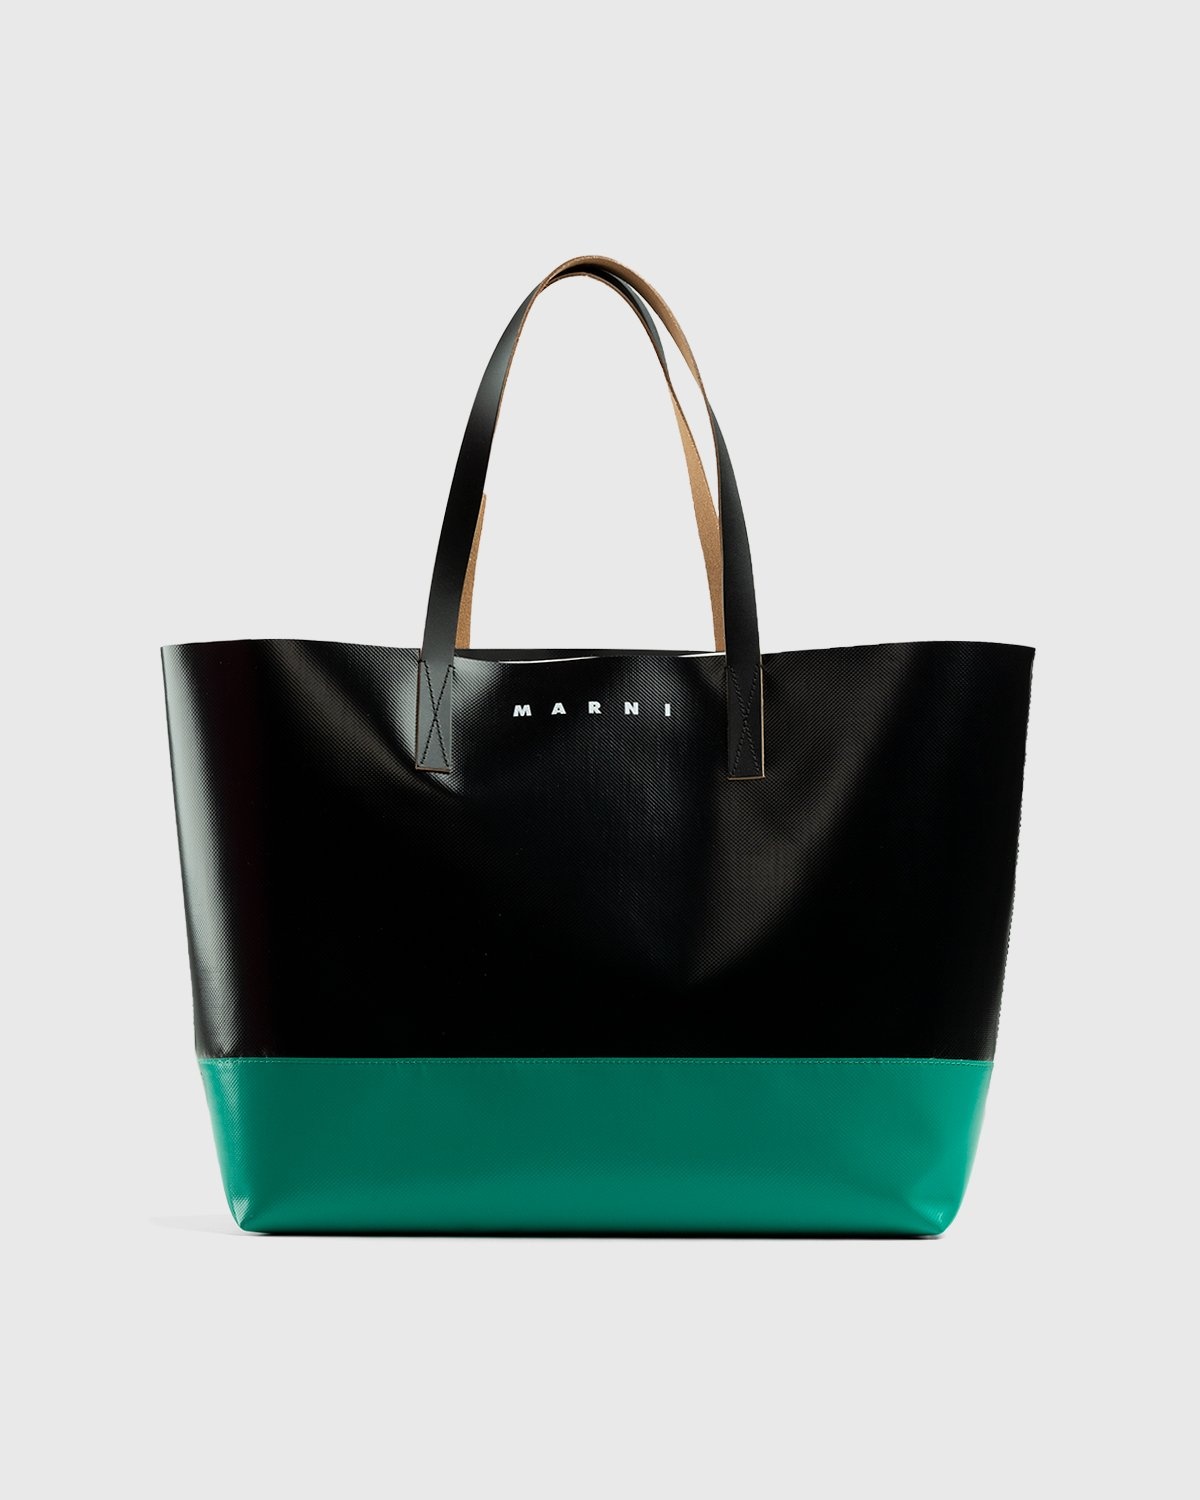 Marni – Tribeca Two-Tone Tote Bag Black/Green - Bags - Black - Image 1